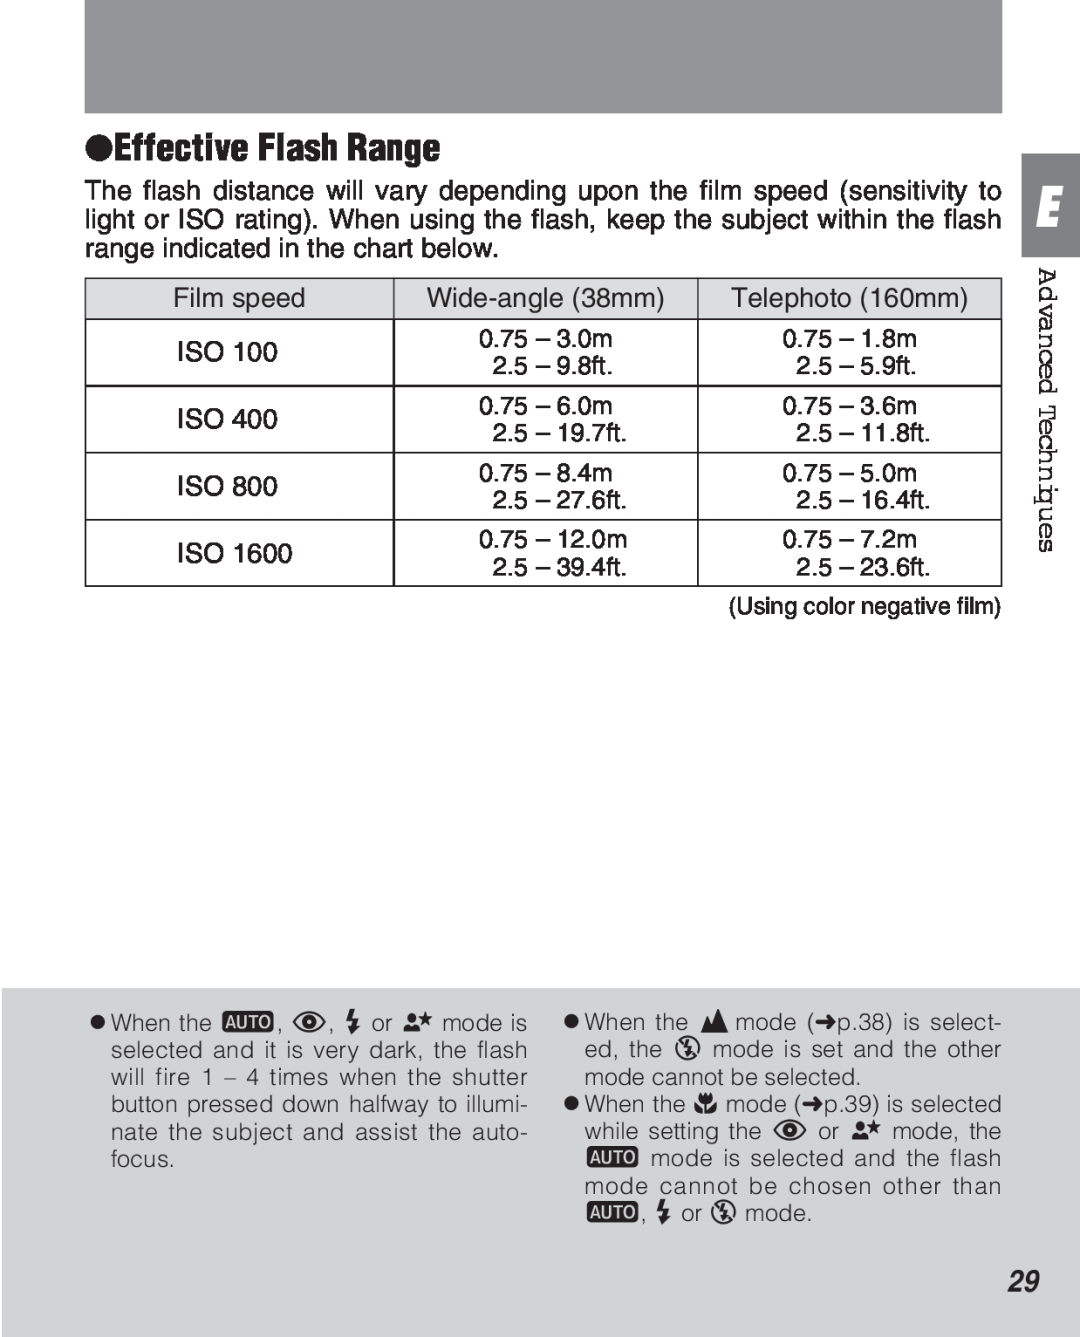 FujiFilm Zoom Date 160ez owner manual Effective Flash Range, Advanced Techniques 